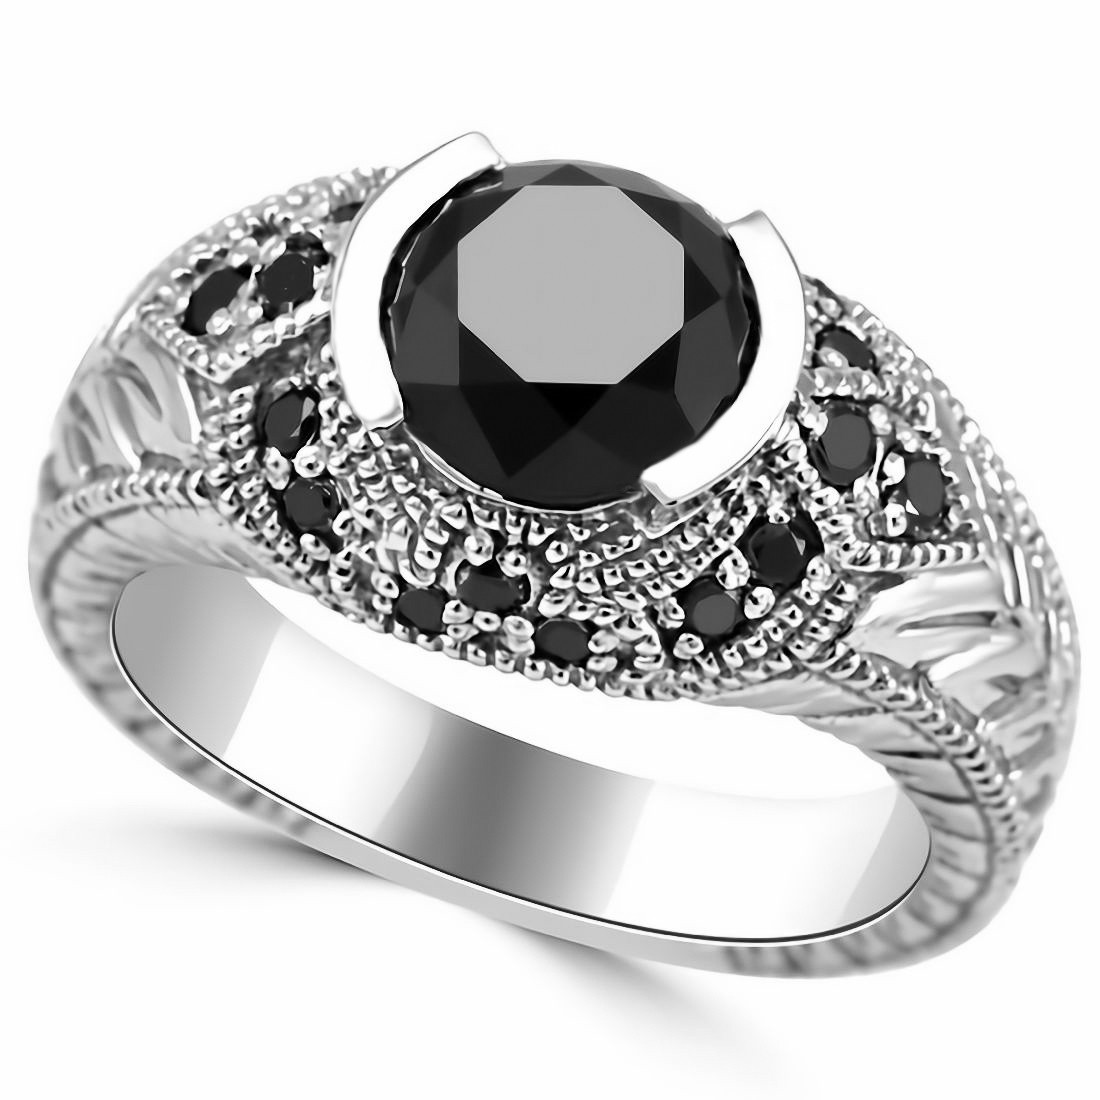 Fancy Black Diamond Engagement Ring Antique Style